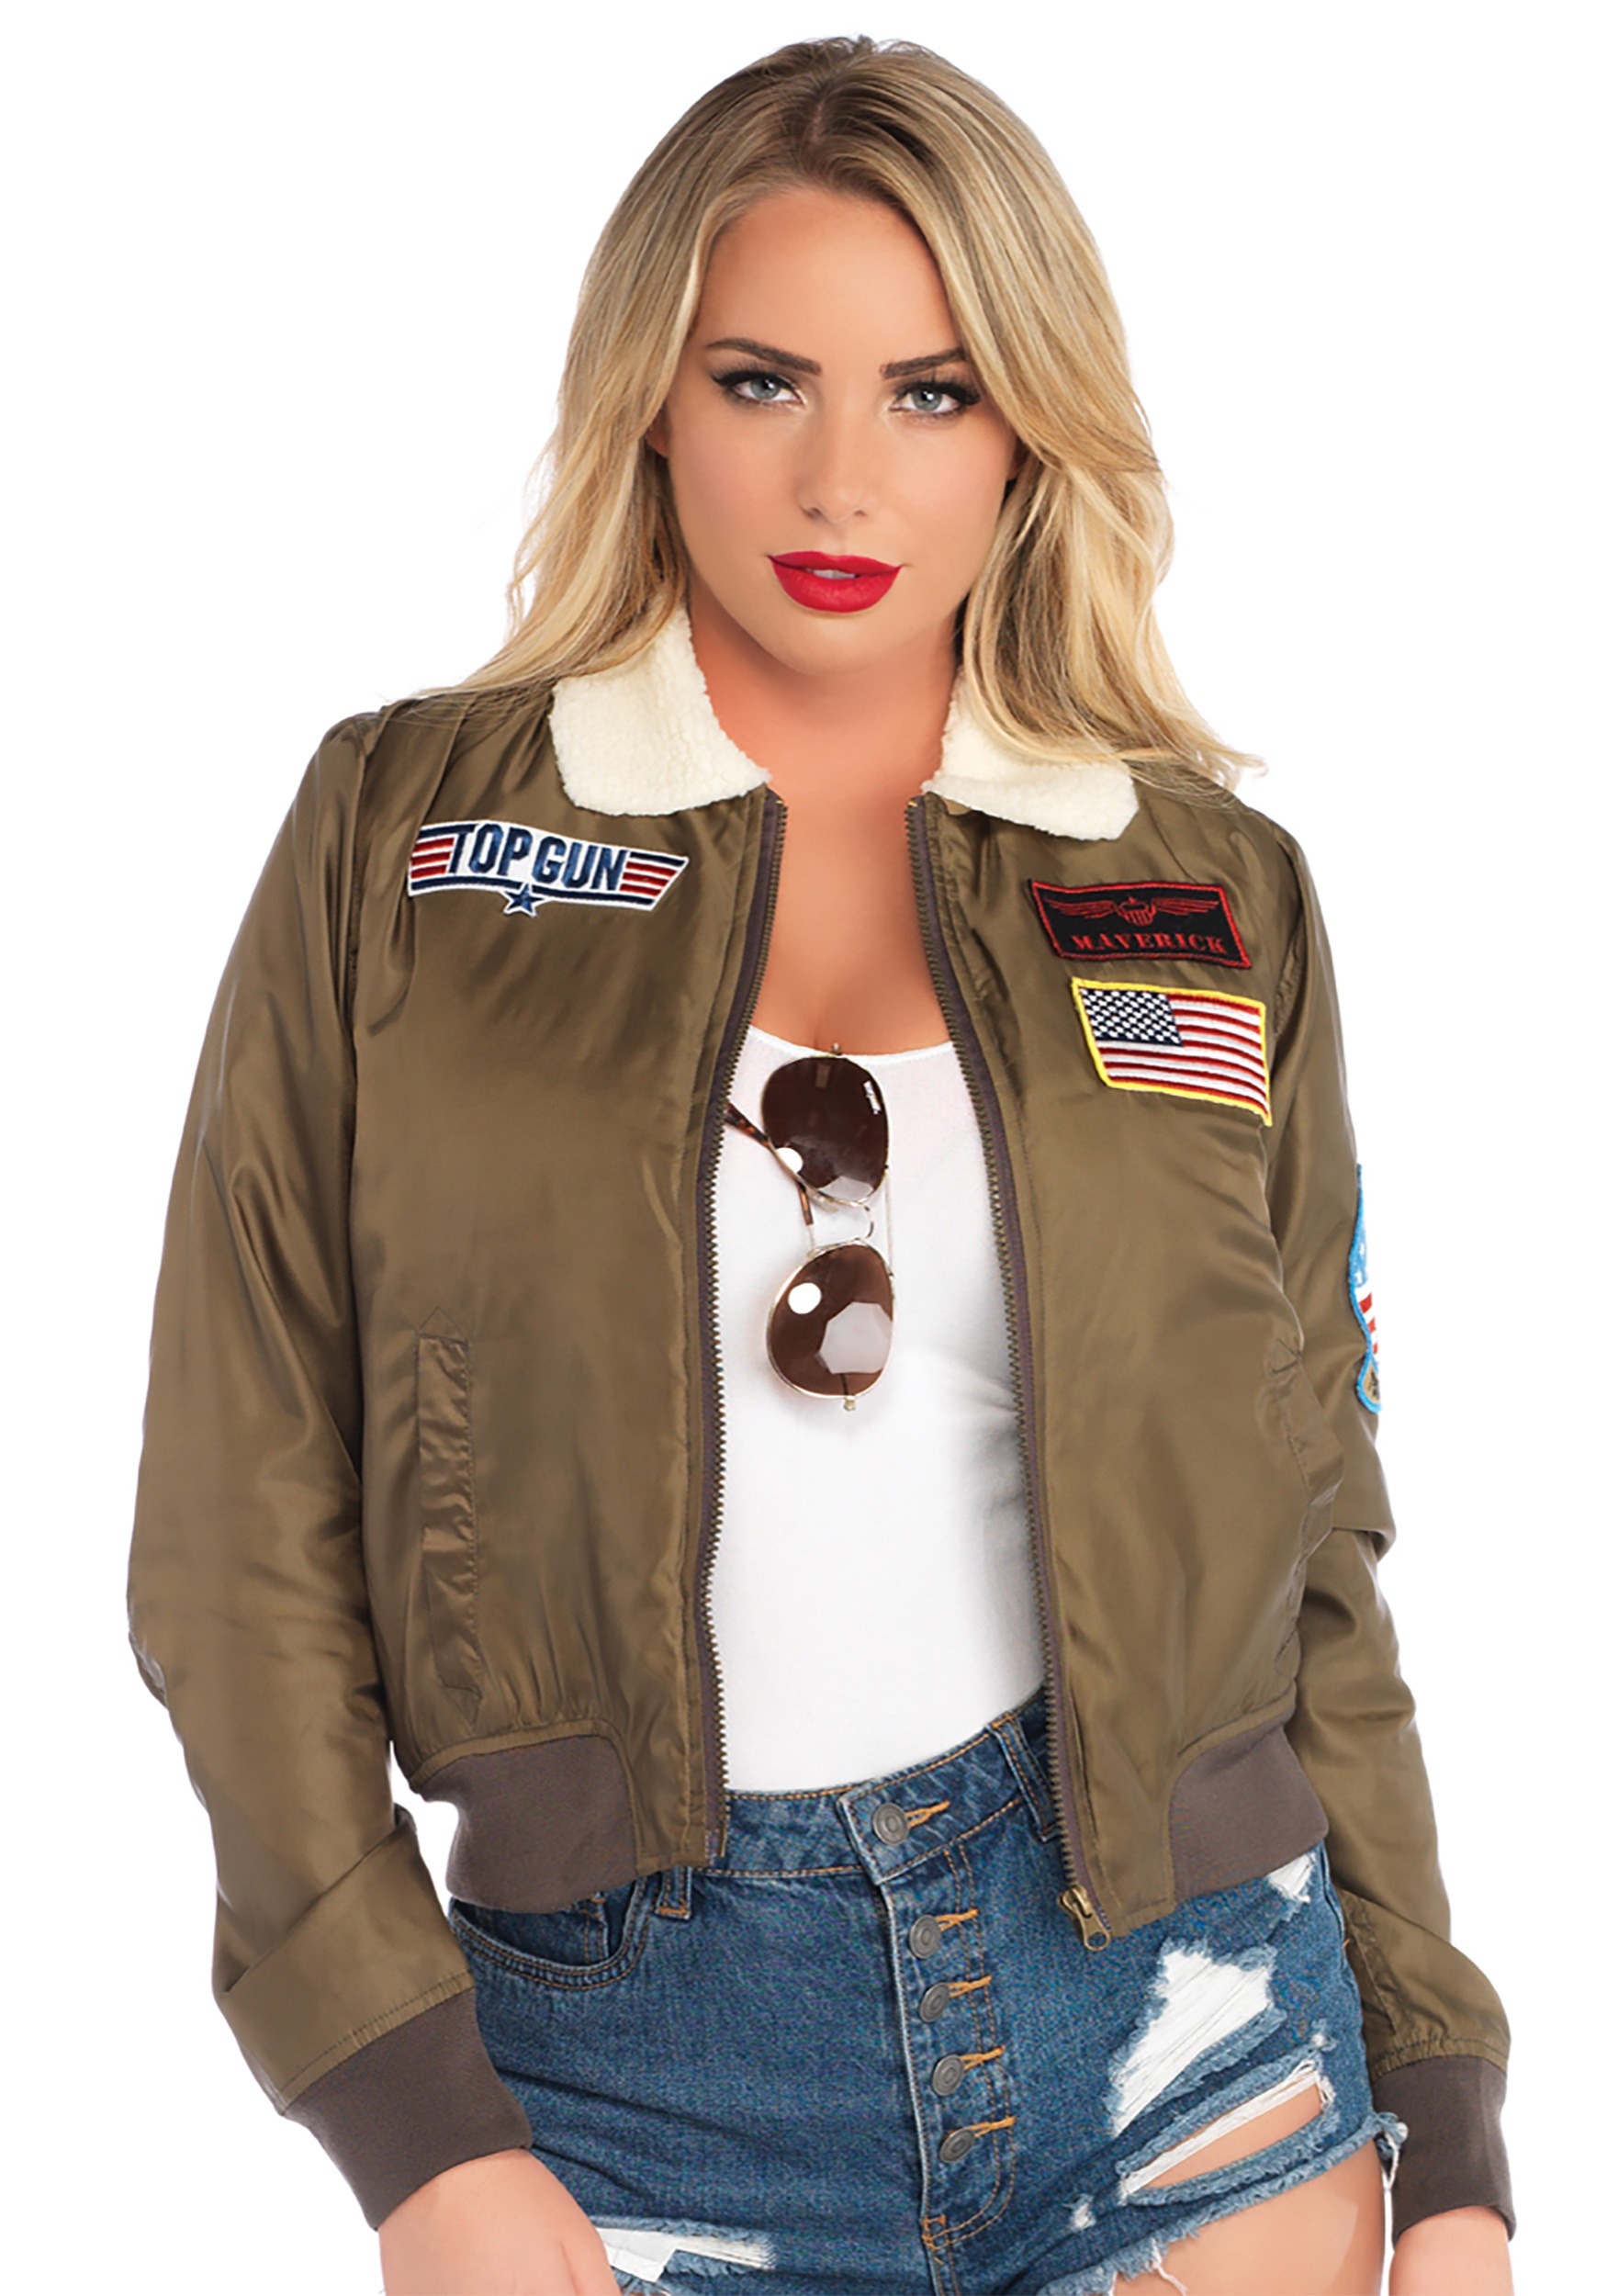 Top Gun Bomber Jacket for Women